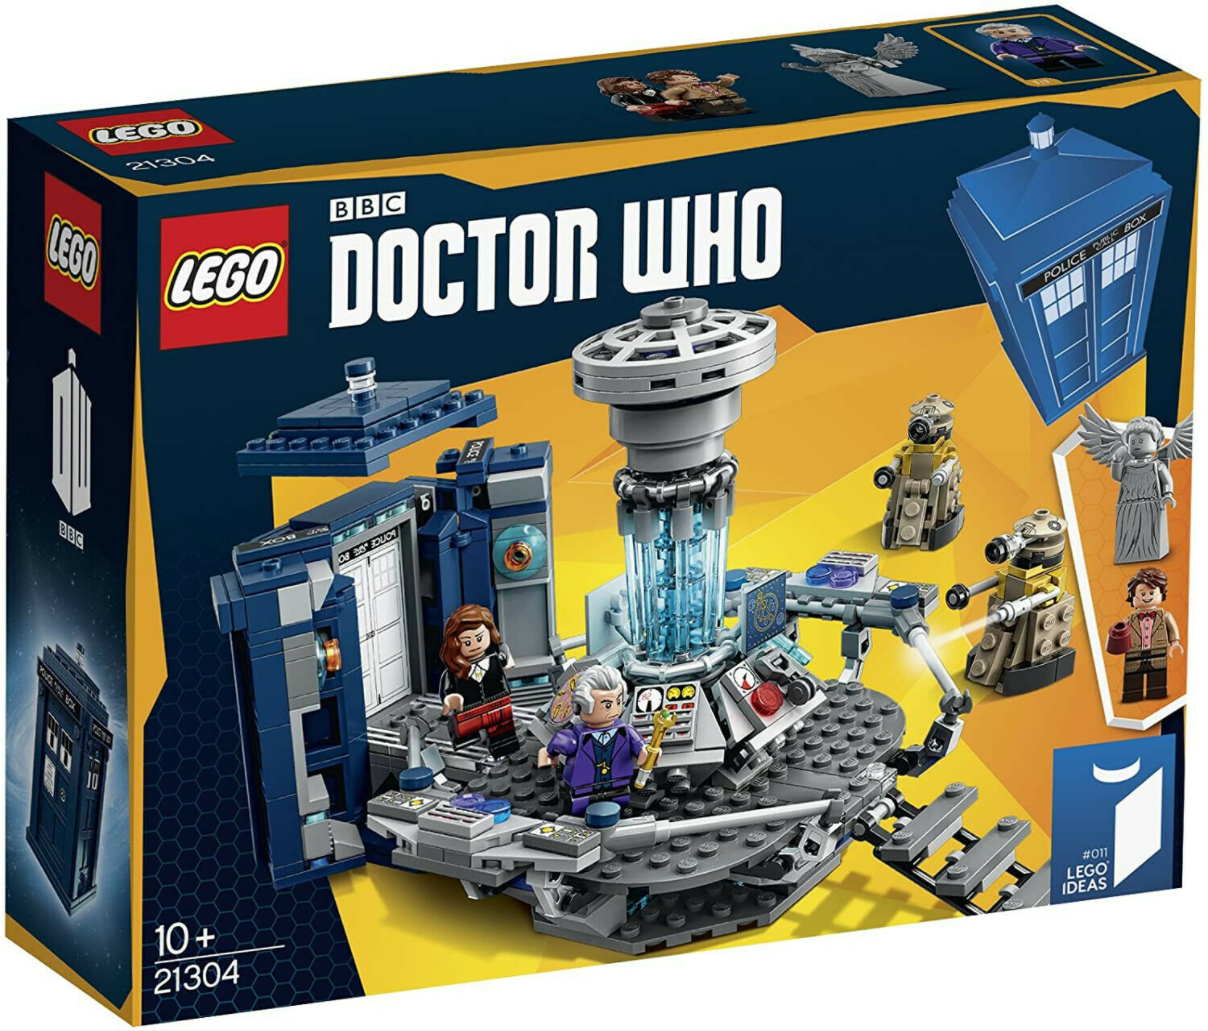 Immagine relativa a LEGO 21304 Doctor Who